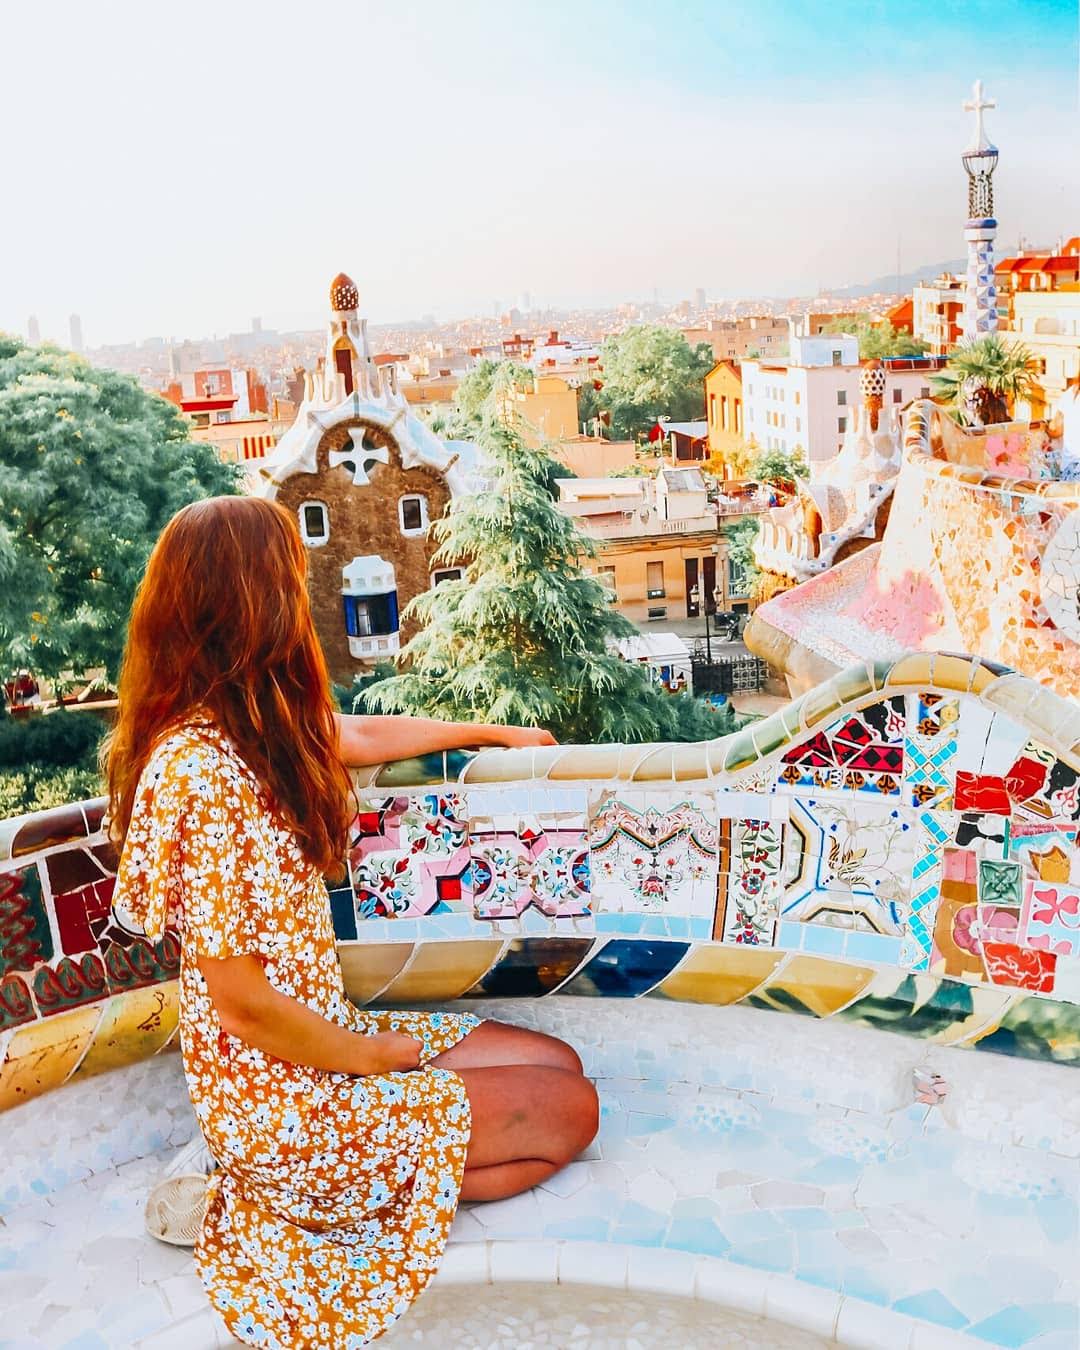 Barcelona Instagram Guide | Travel Guide - Helena Bradbury | Barcelona Travel | Instagram Guide | Travel Destination | Spain Travel | Gaudi | Sagrada Familia | Photography | Photo Locations | Instagram Spots | Photo Guide Travel Girl | Solo Travel |…